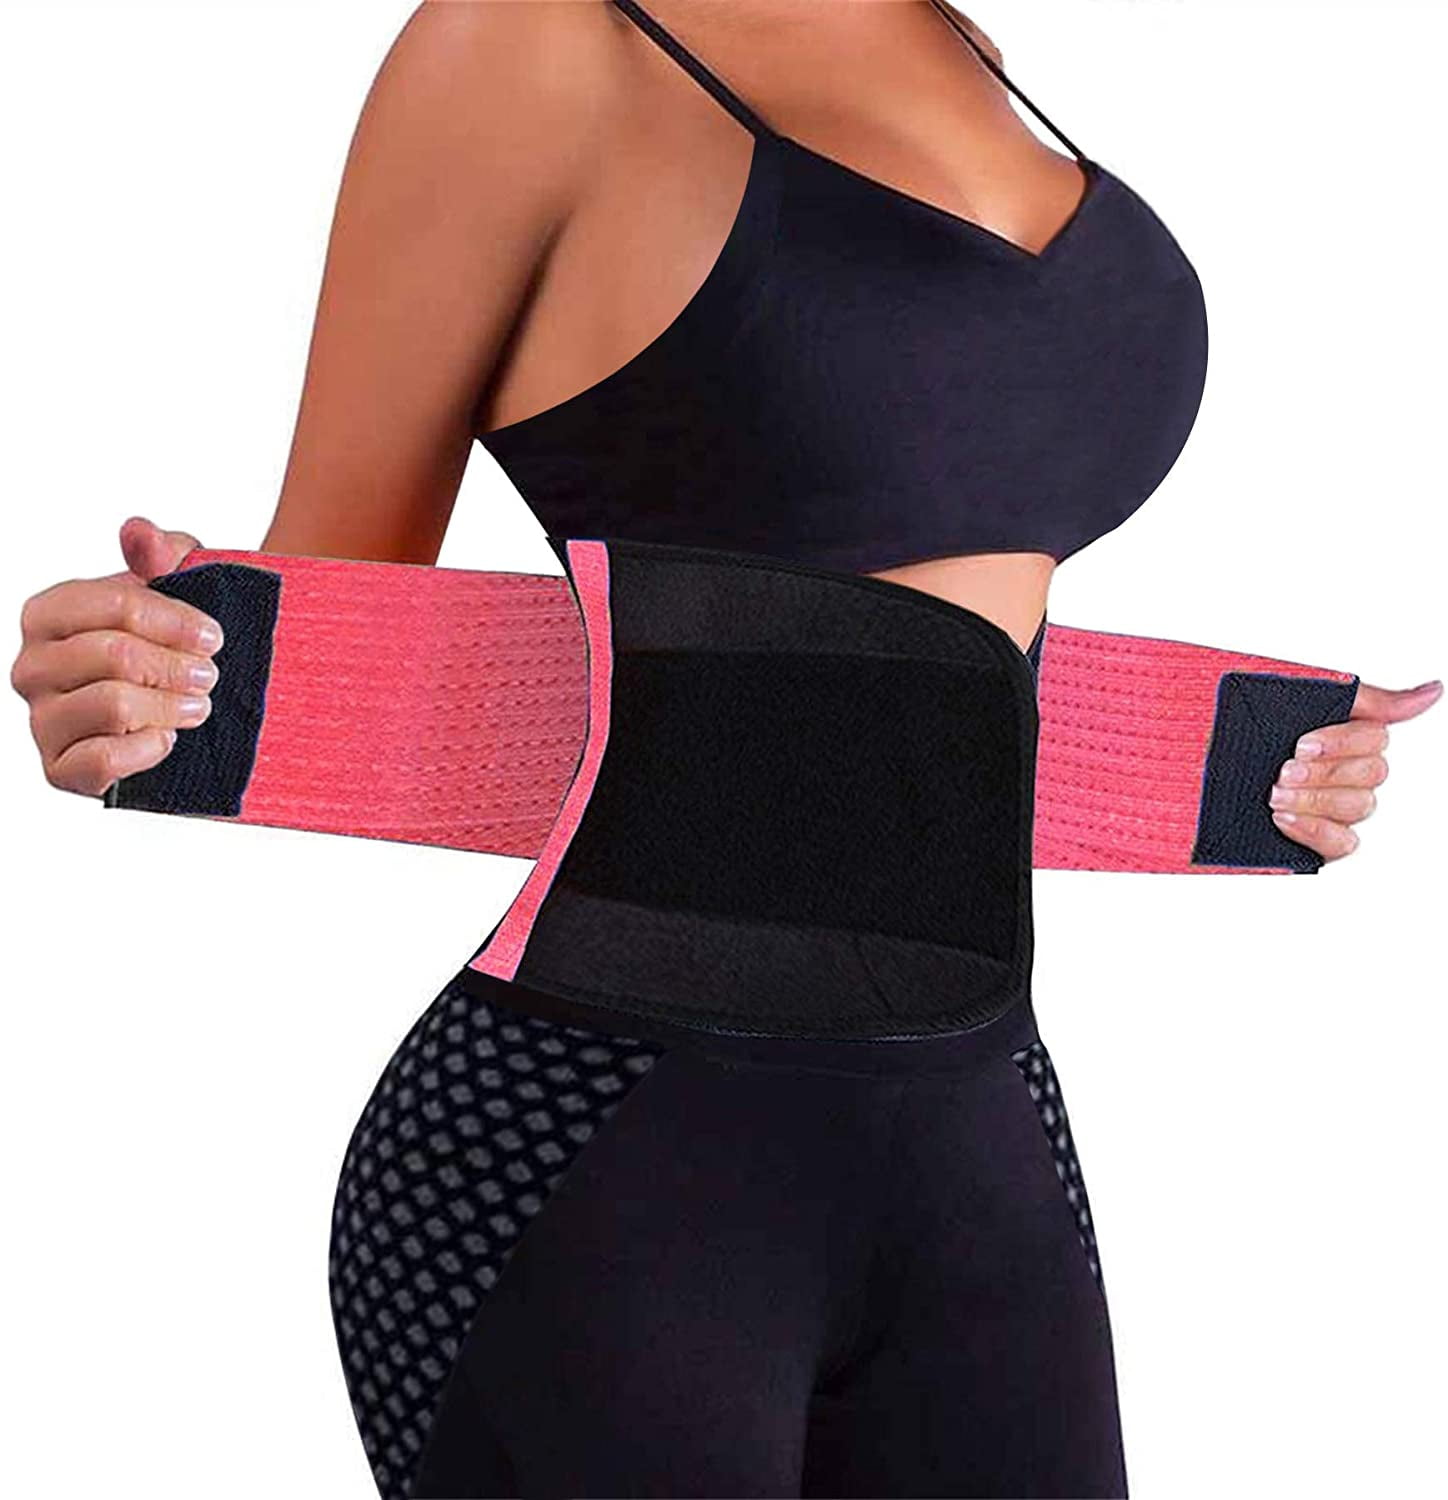 COMFREE Waist Cincher Corset Shapewear Waist Trainer Tummy Control Body Shaper Slimming Belt Fat Burner for Women Sport Weigt Loss with Pocket 